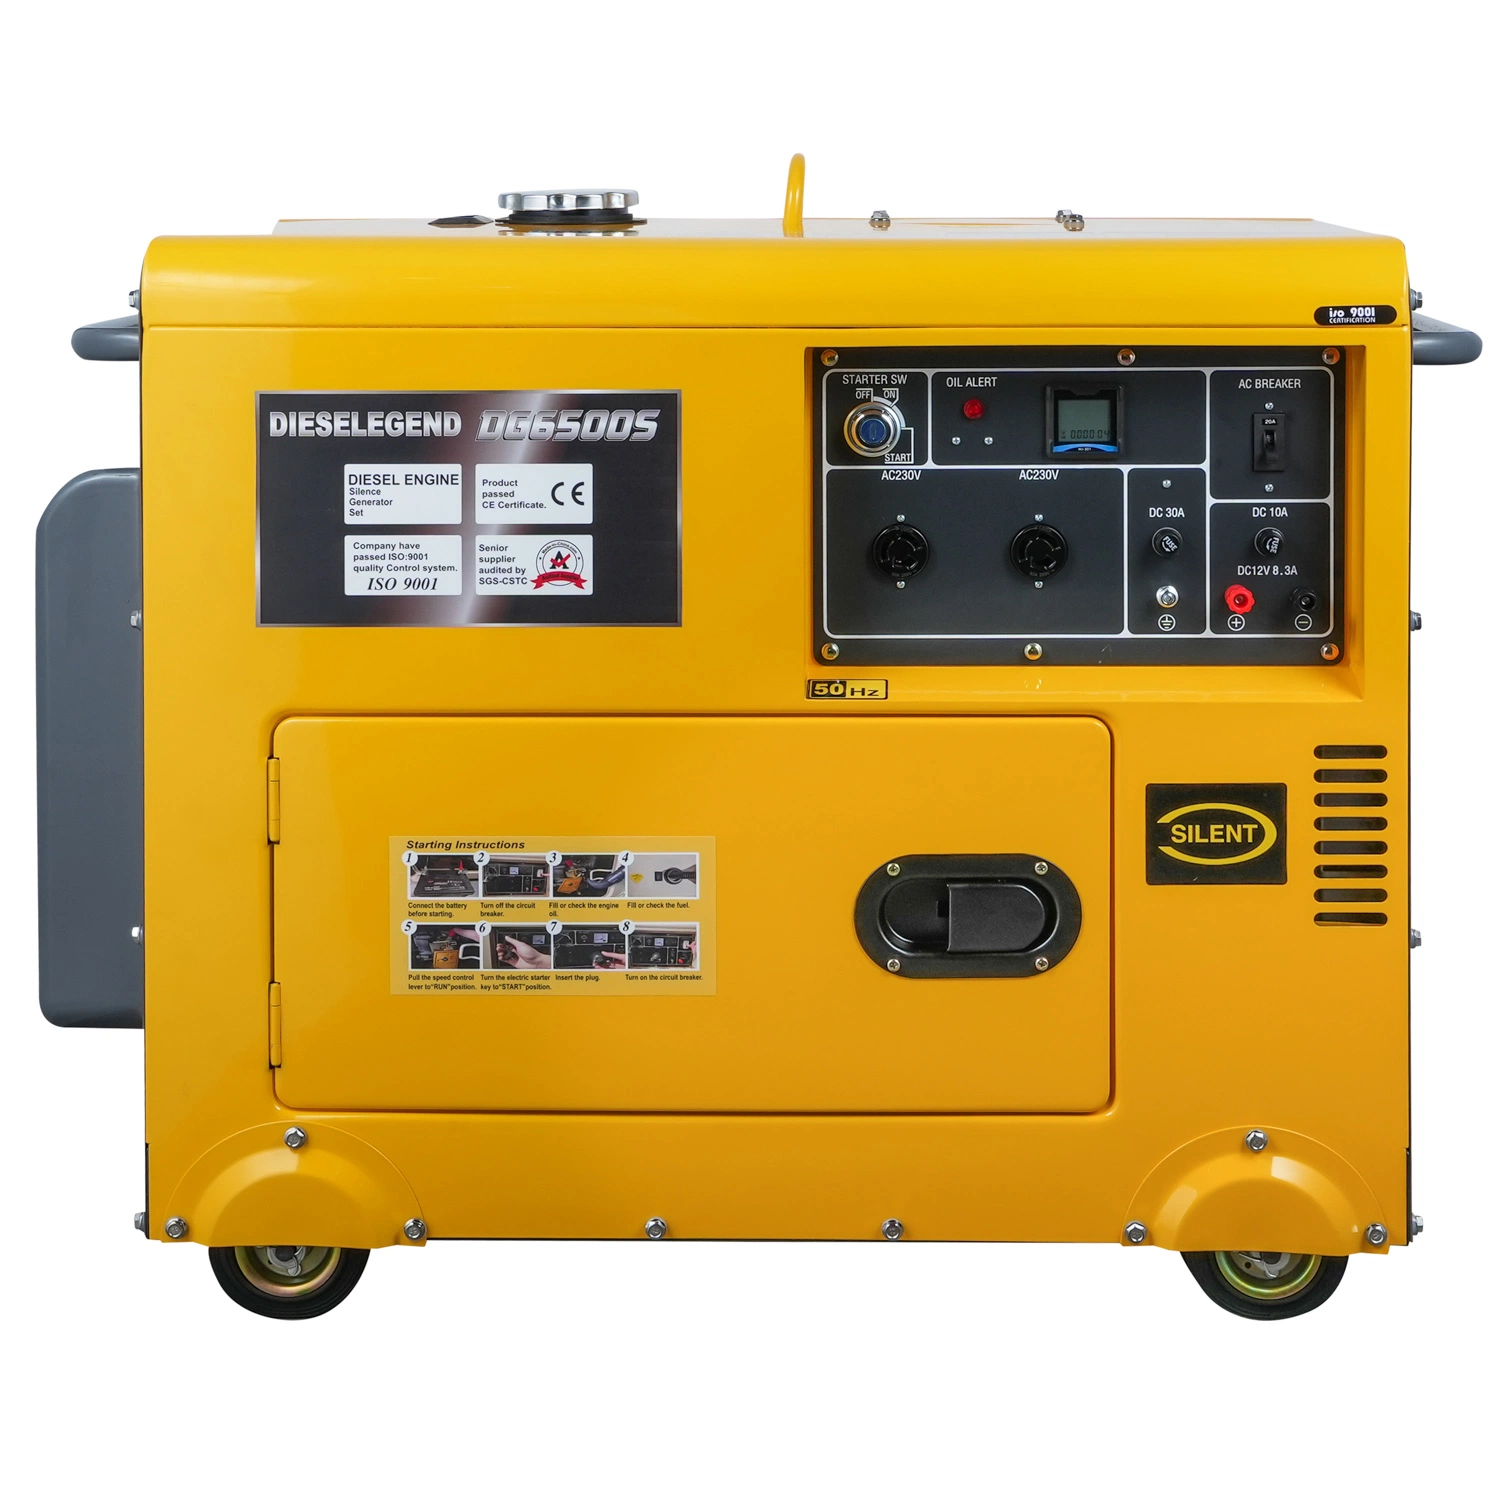 Air Cooled 5kw/6kw/7kw Silent Diesel Generator Set (DG6500S)